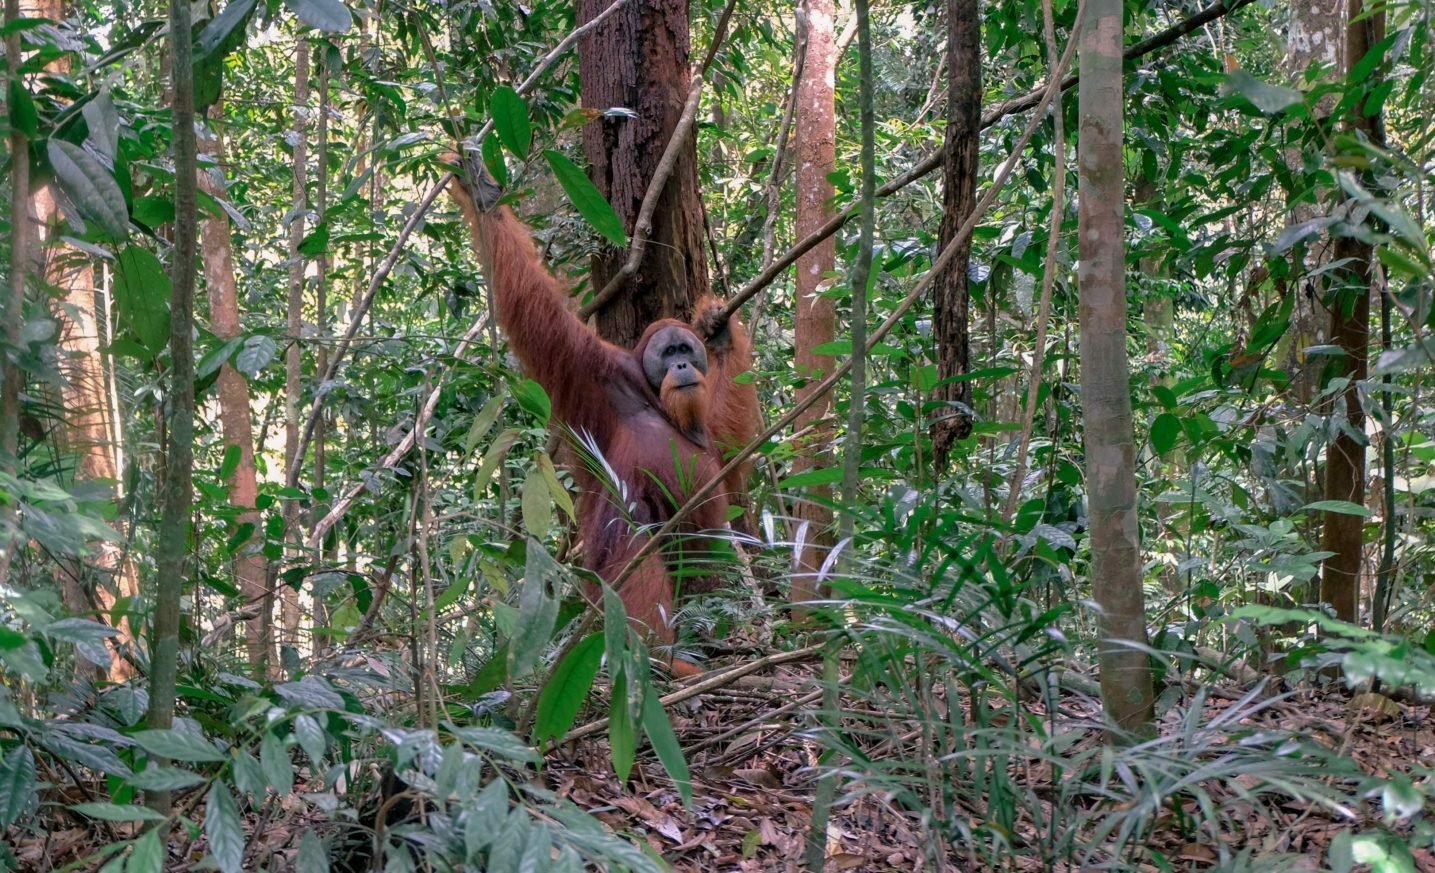 Orangutans in Sumatra Indonesia: Guide To Seeing Endangered Orangutans in The Wild